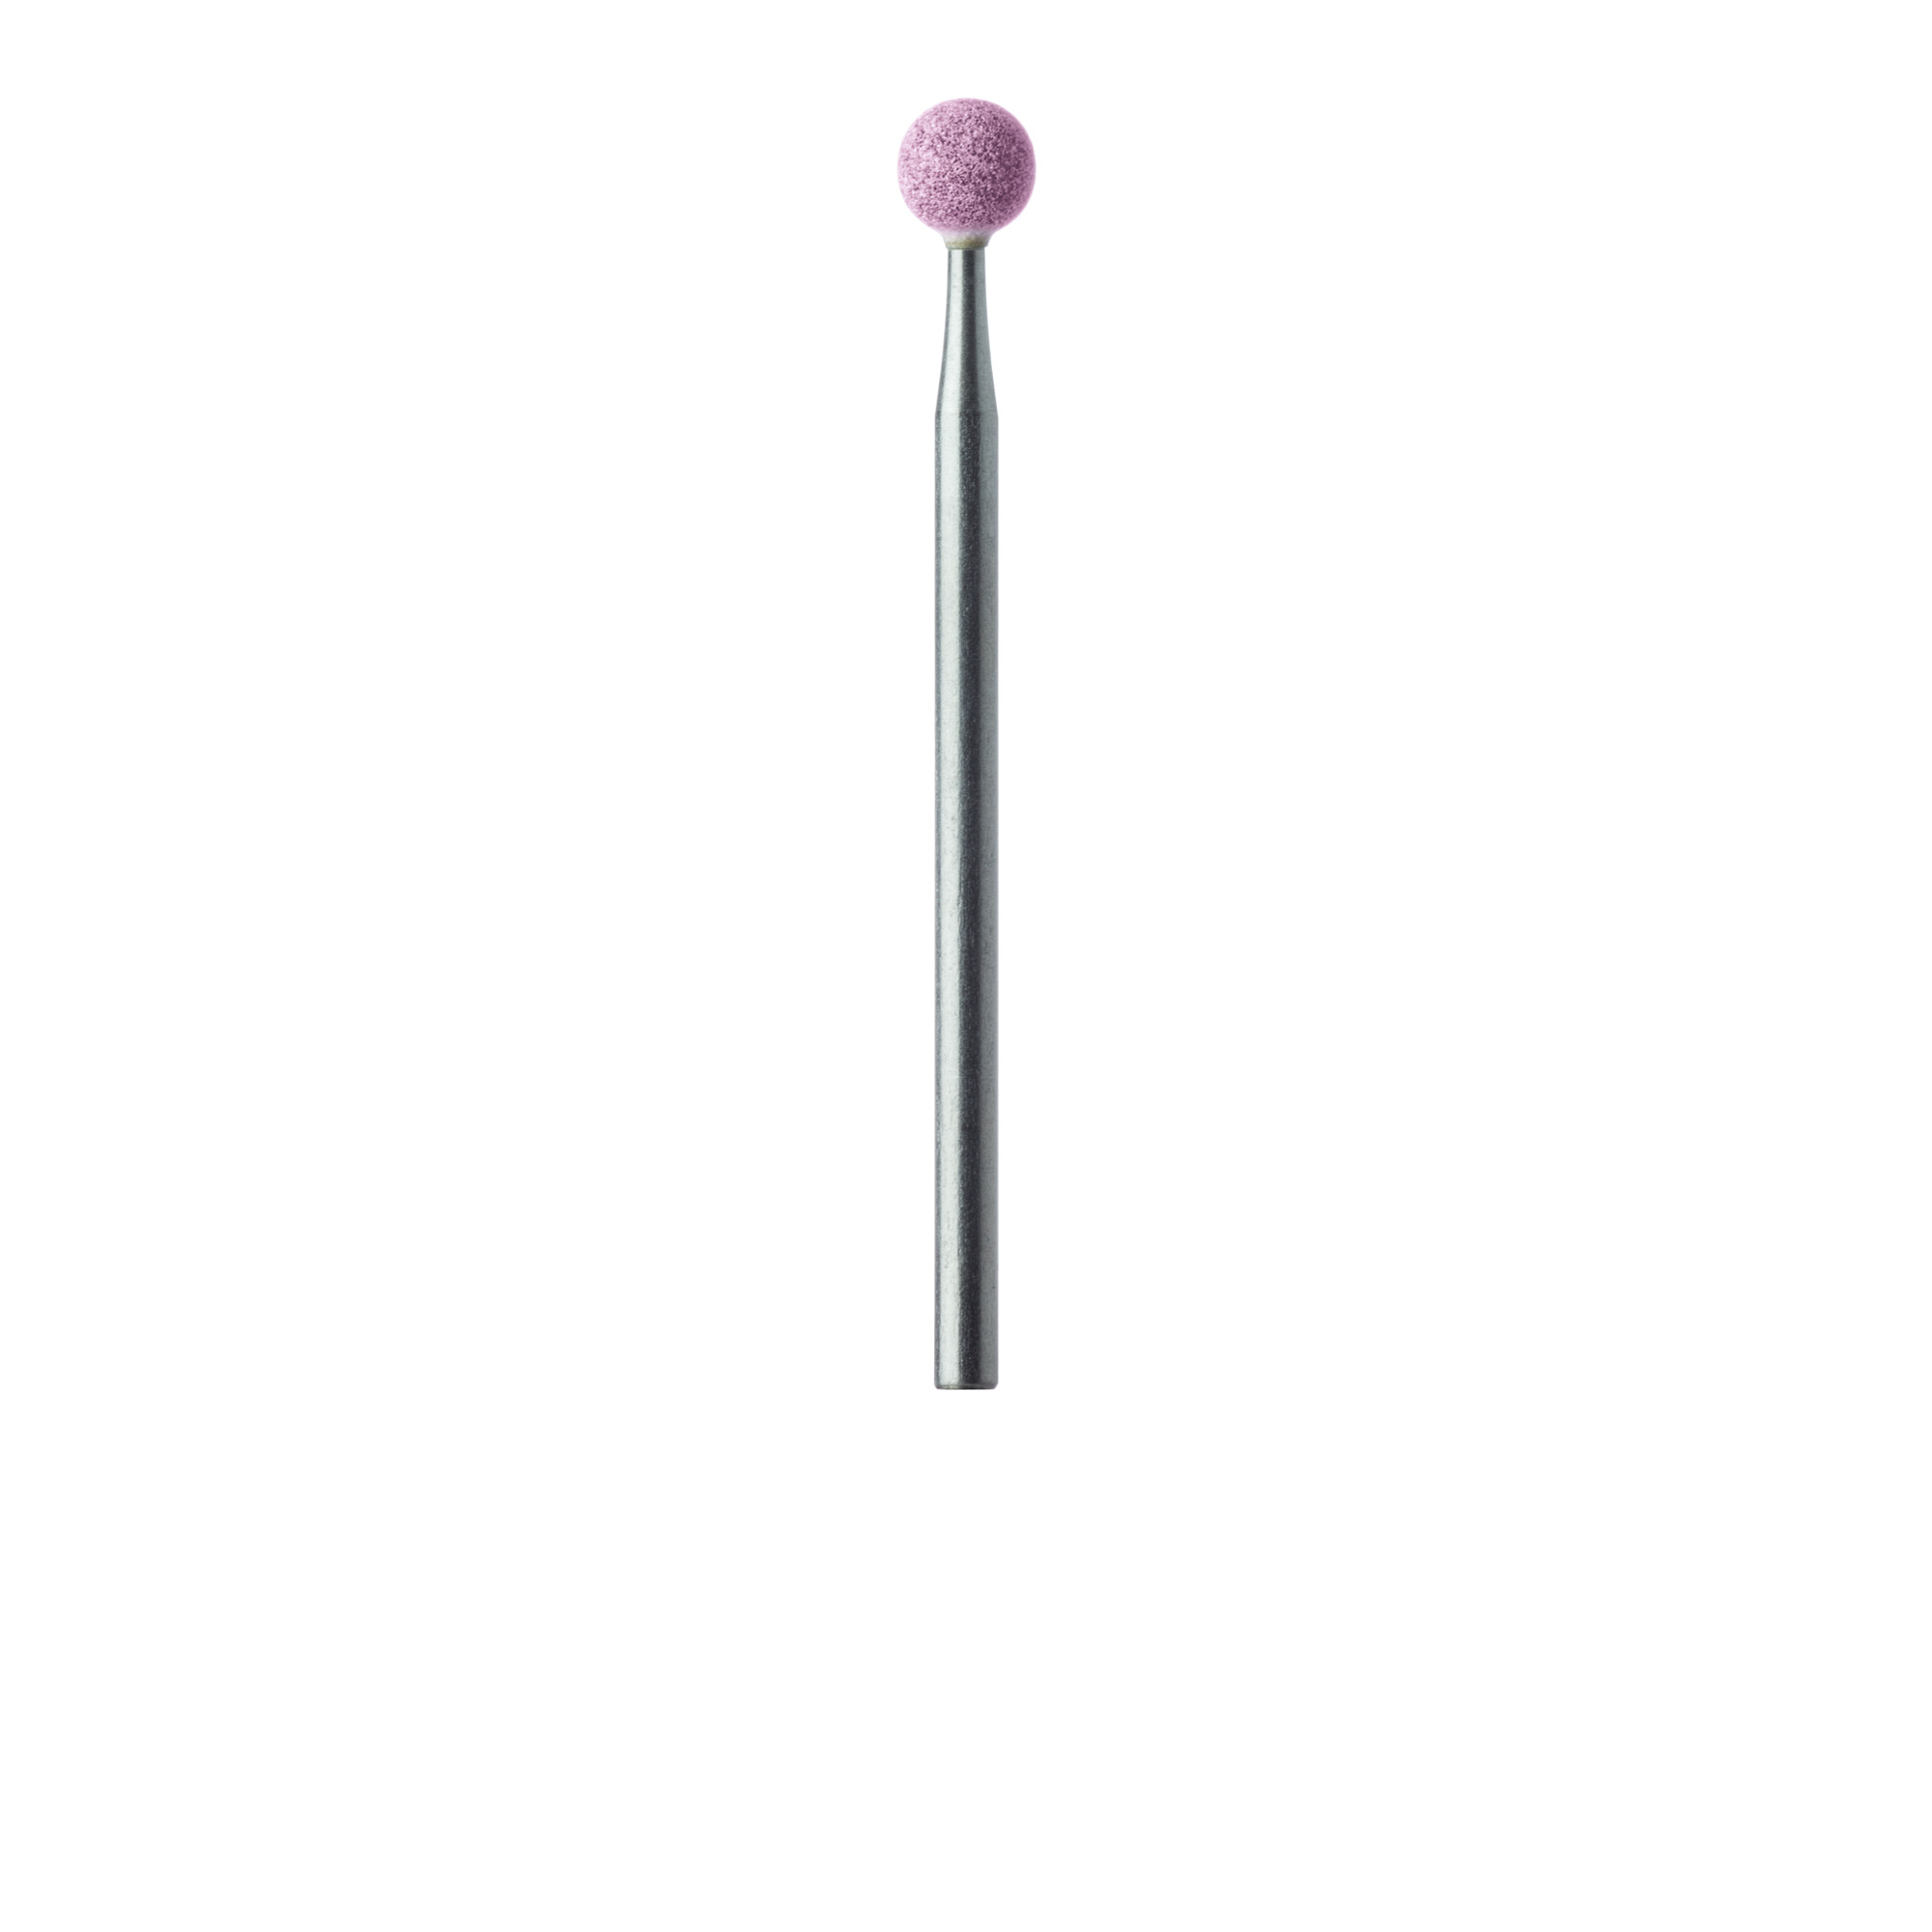 603-050-HP-P Abrasive, Pink, Round, 5mm Ø, Medium, HP 